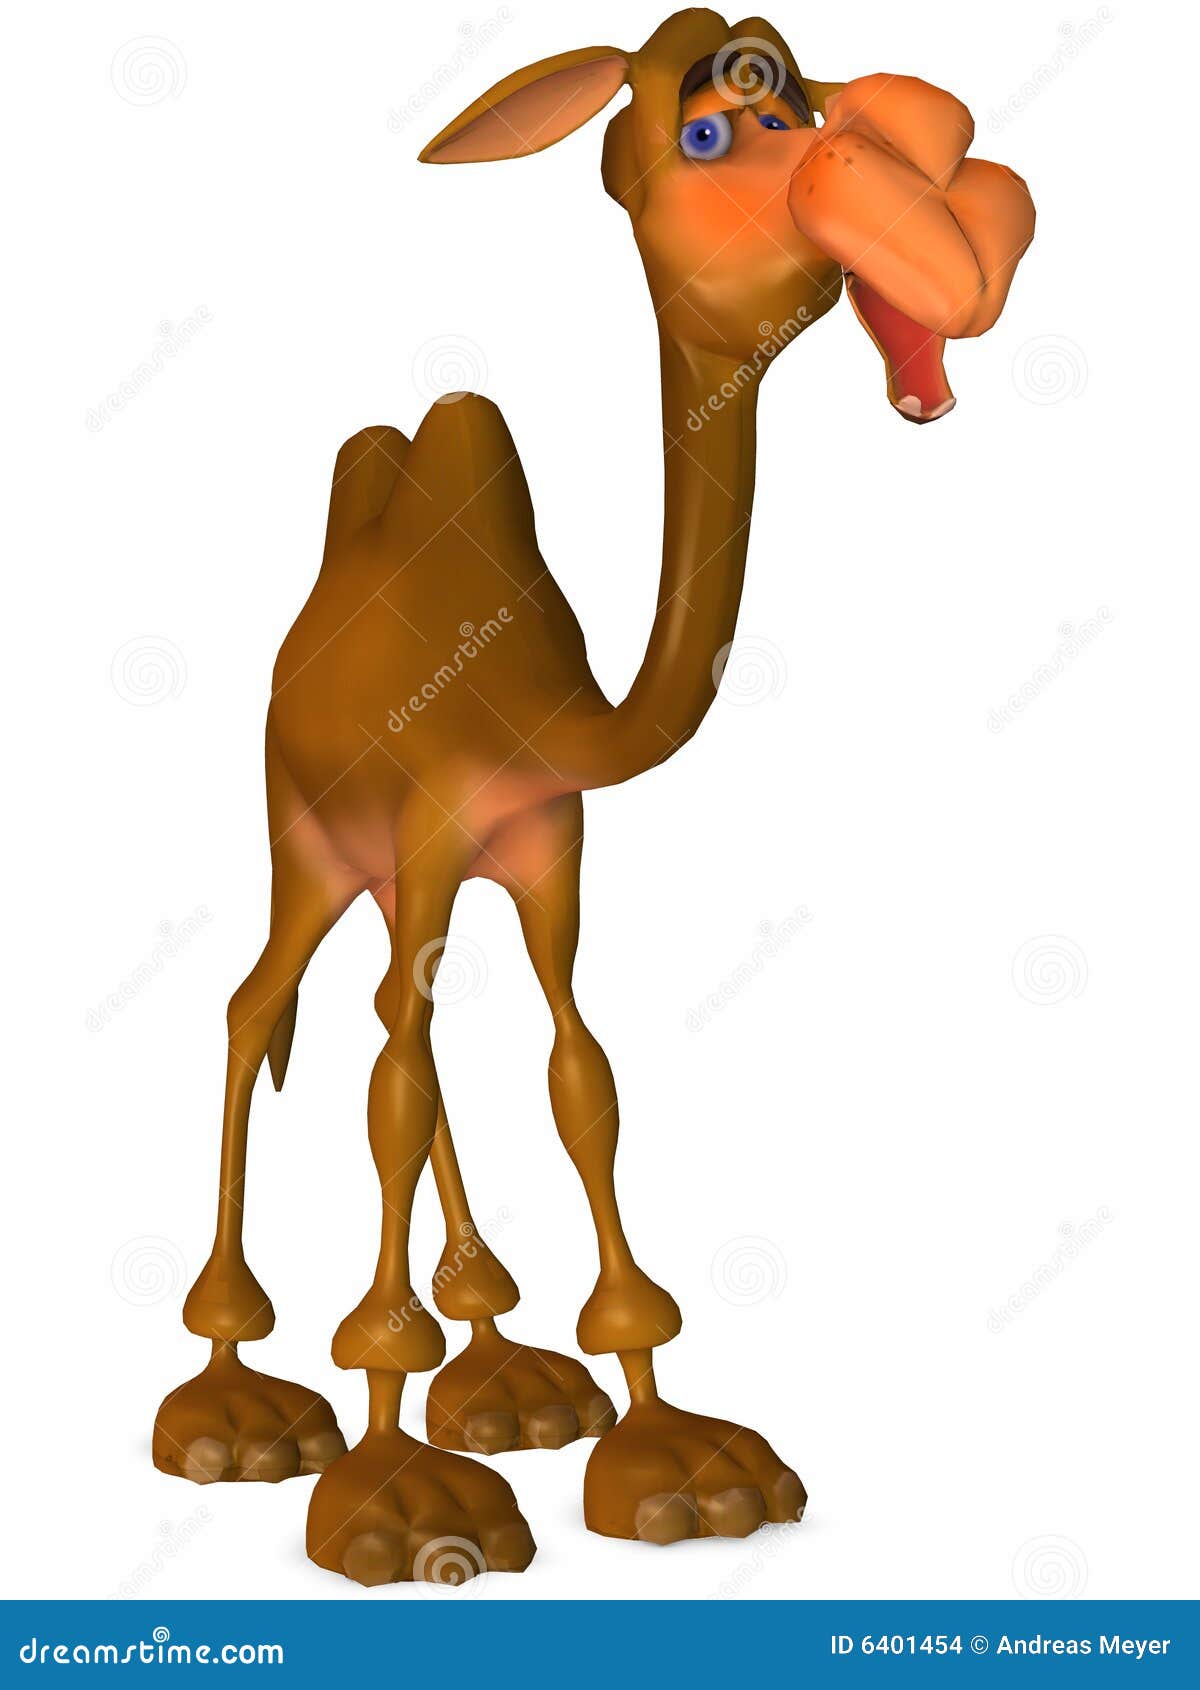 toon camel